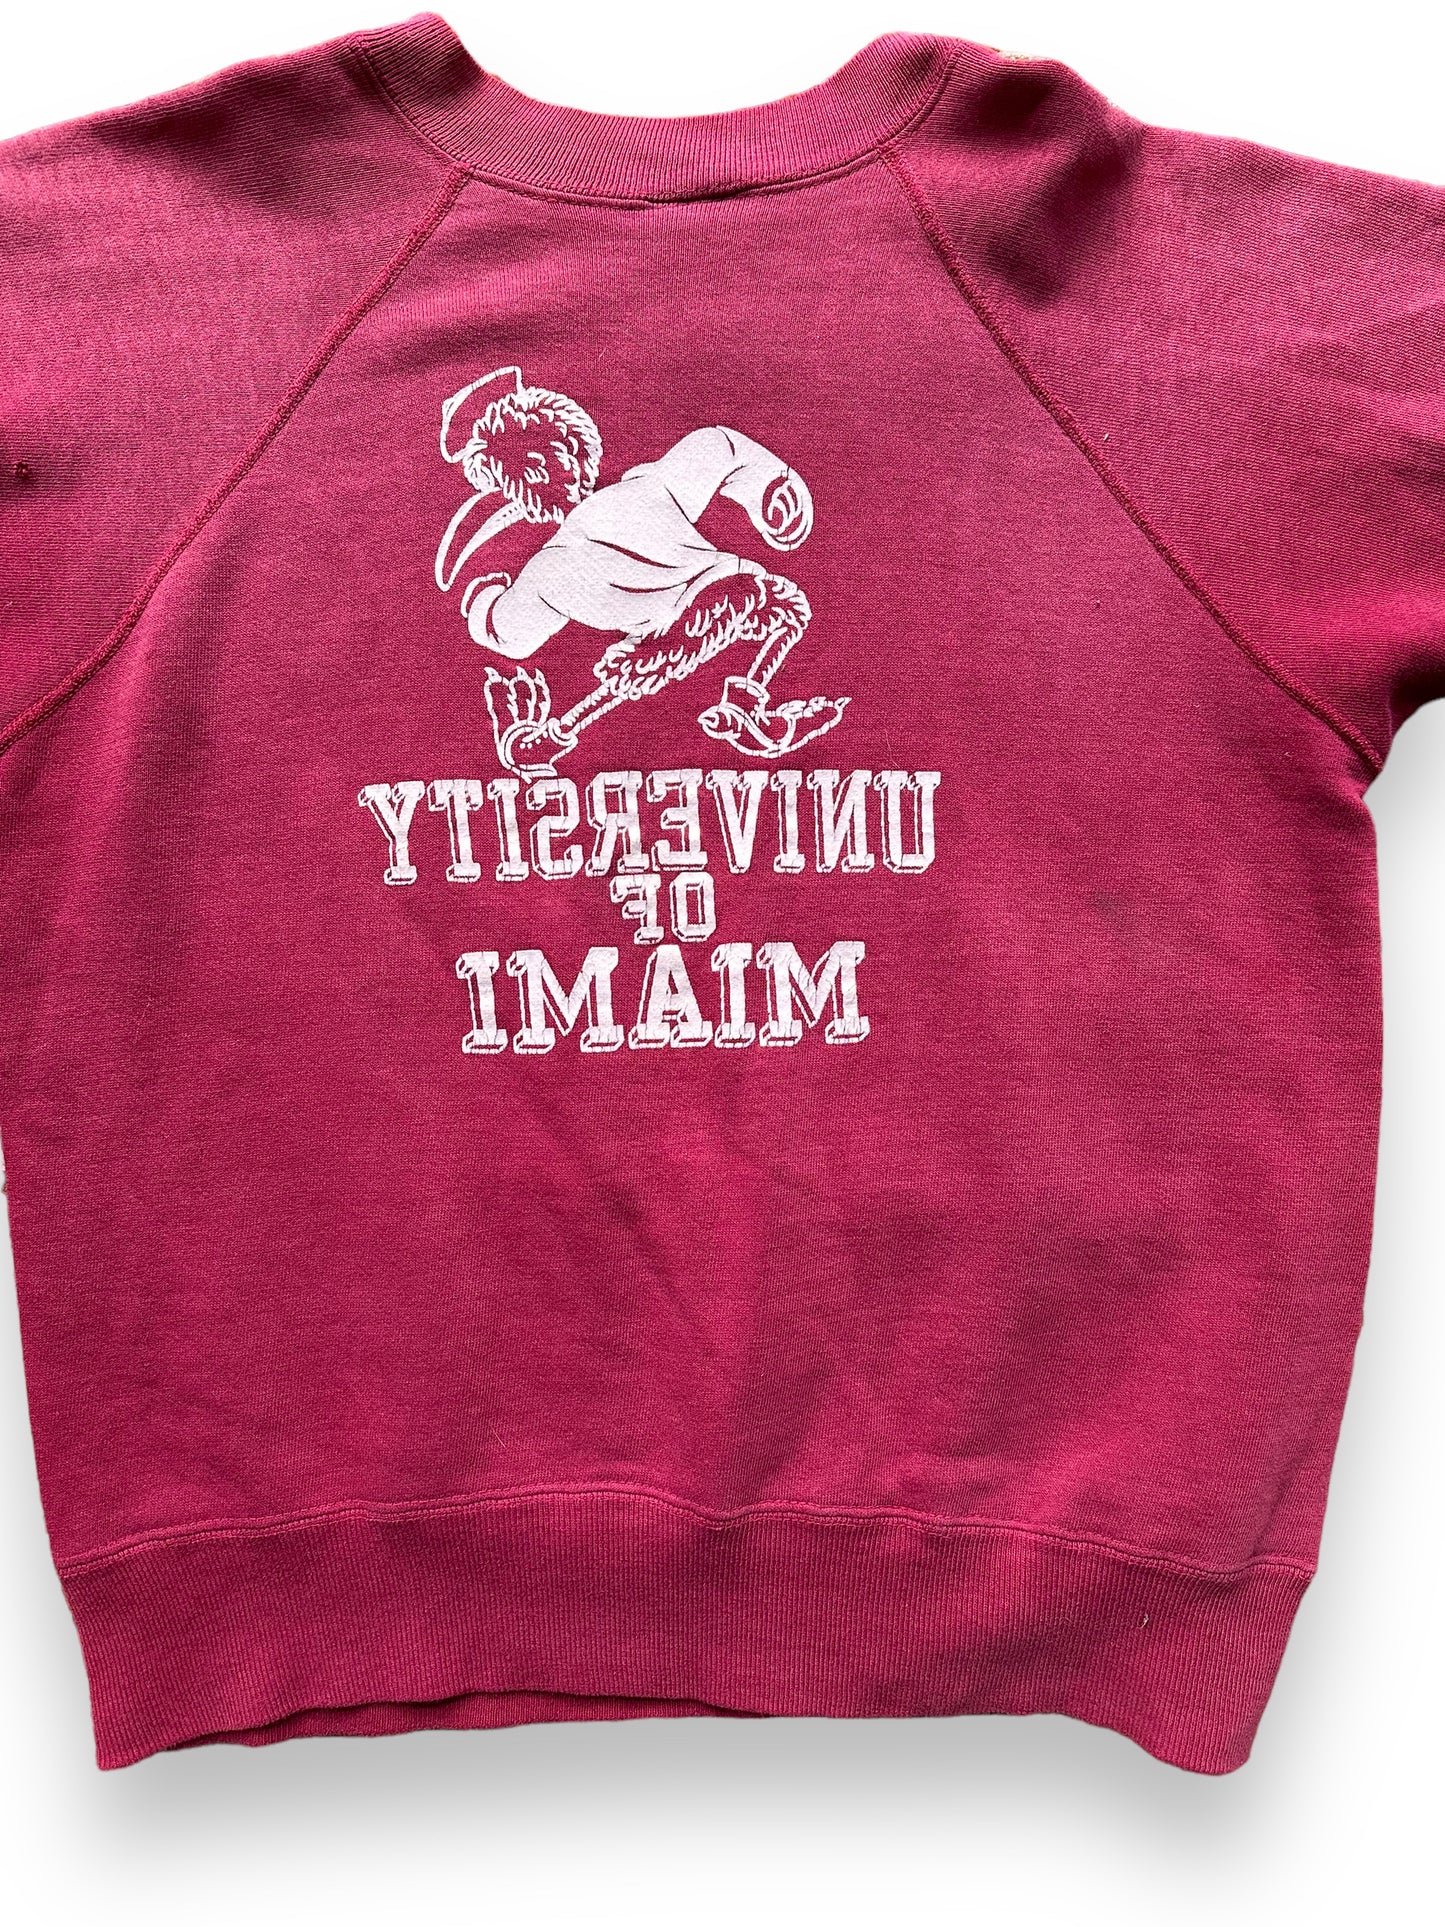 Rear Detail on Vintage Two-Sided University of Miami Short Sleeve Crewneck Sweatshirt SZ M | Seattle Vintage Crewneck Sweatshirts | Barn Owl Vintage Seattle